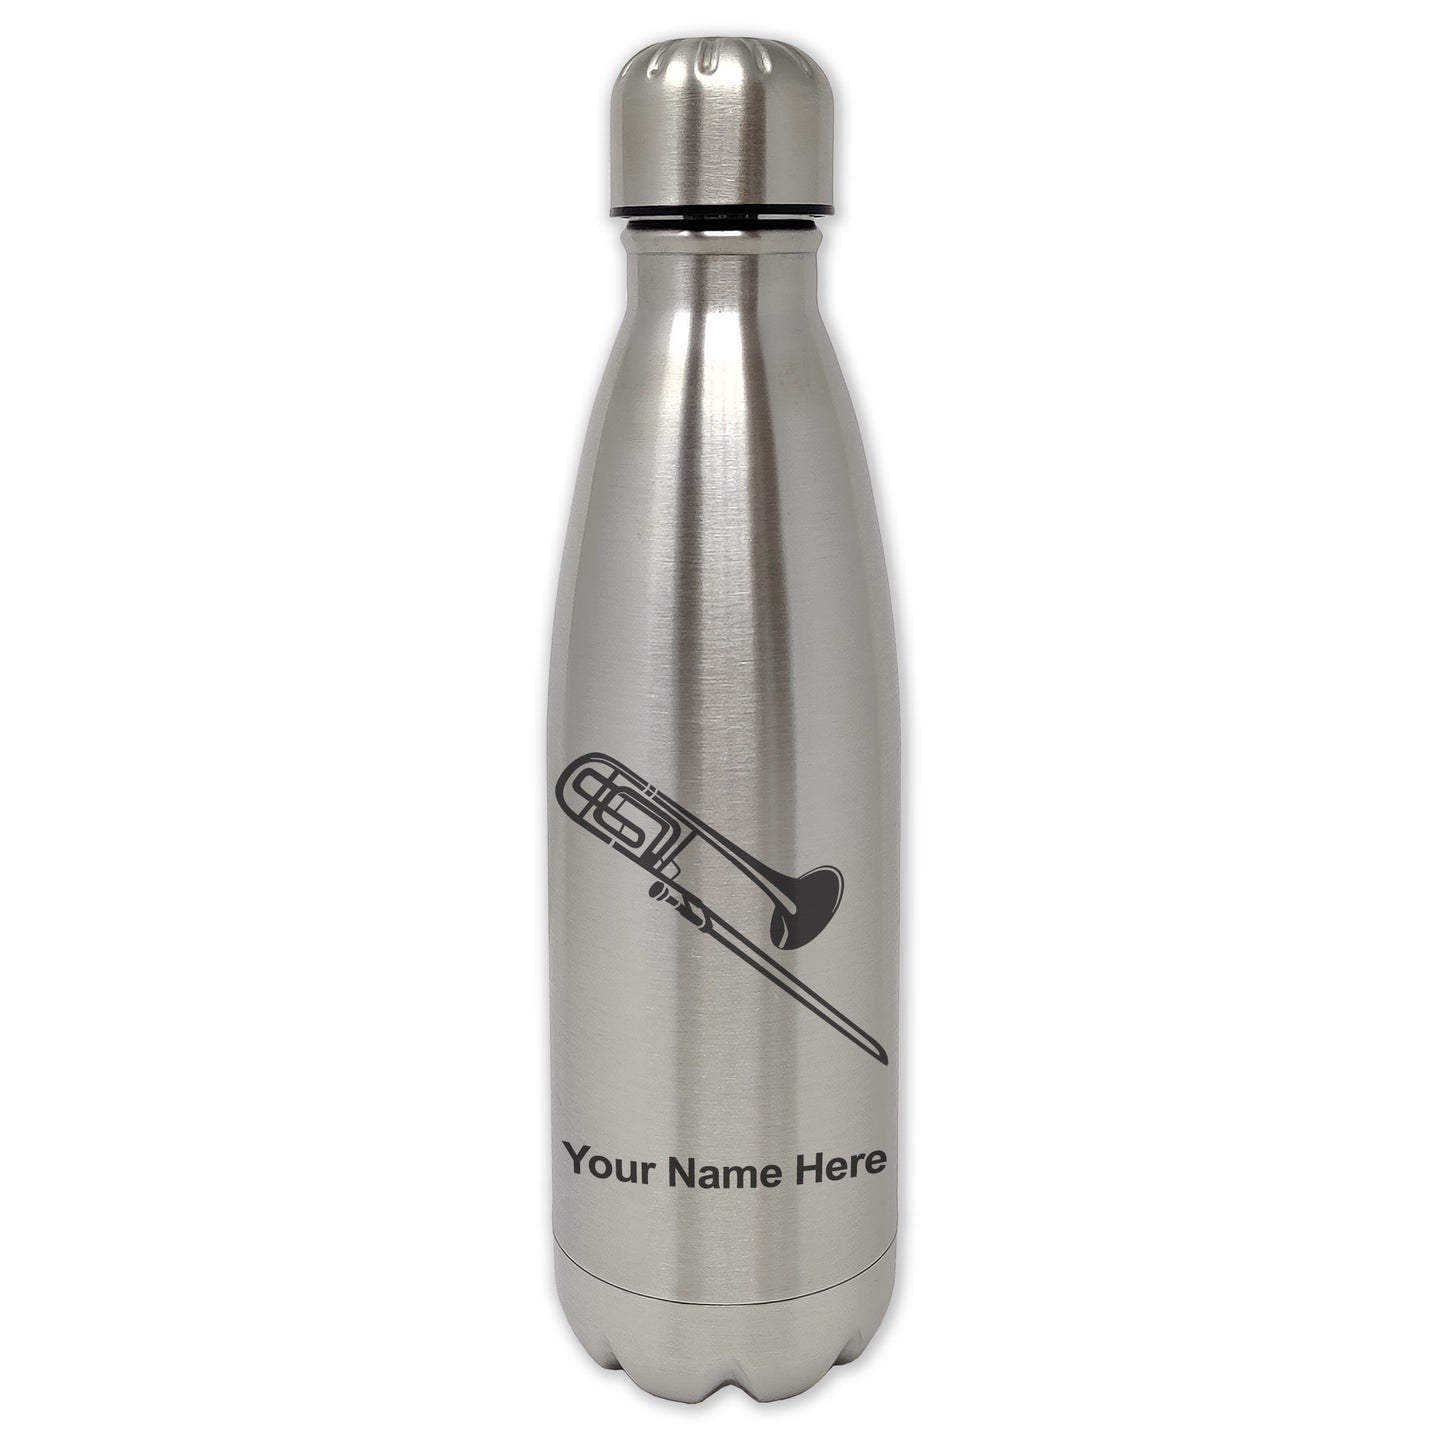 LaserGram Single Wall Water Bottle, Trombone, Personalized Engraving Included